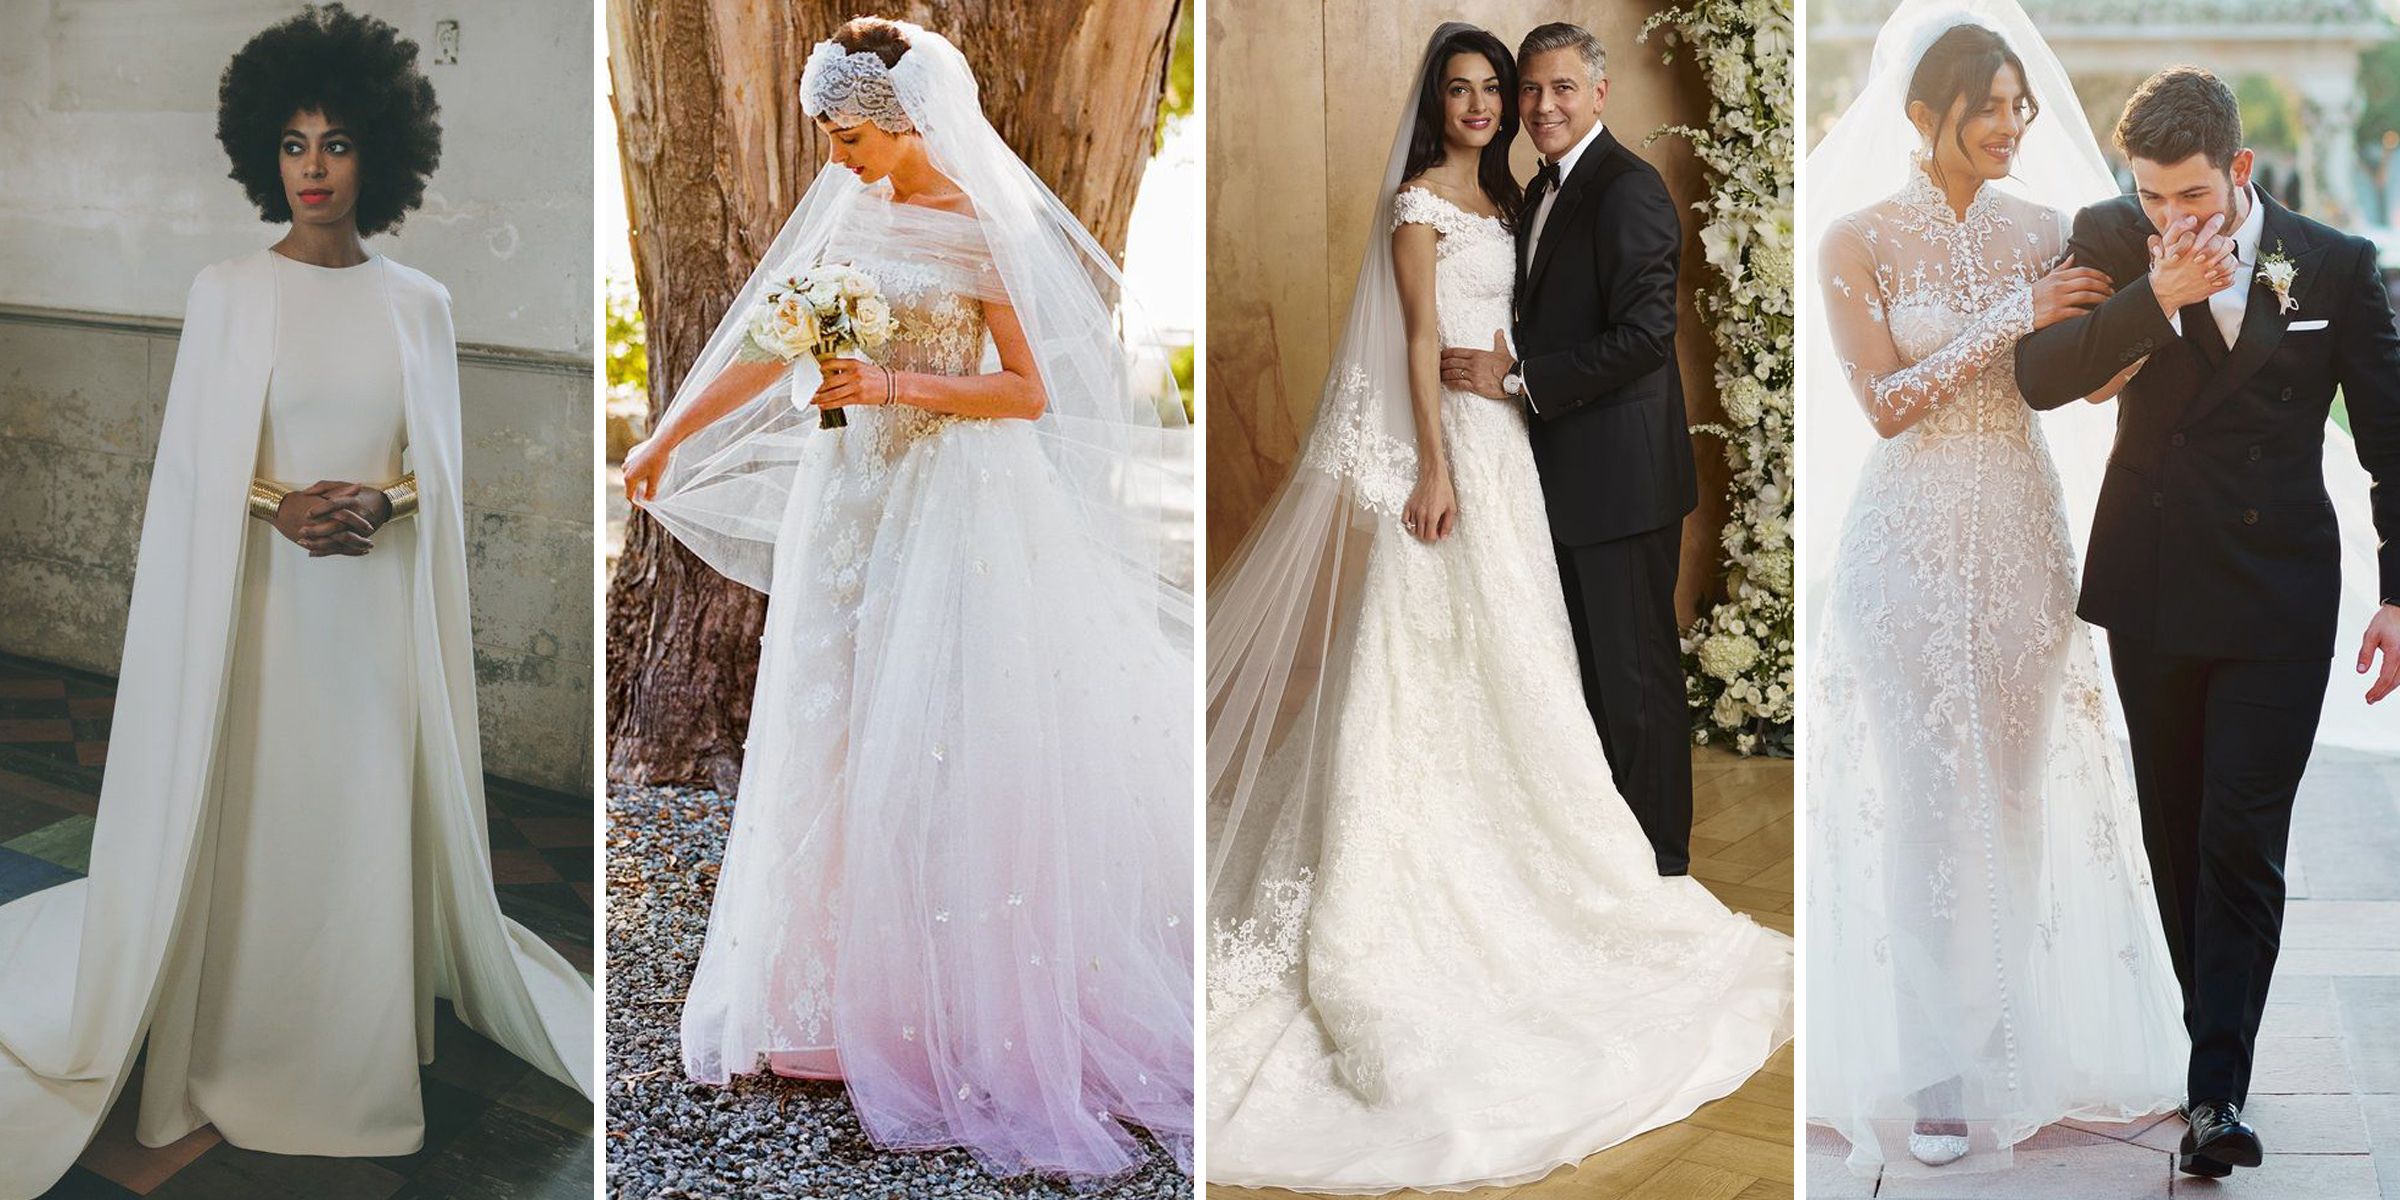 Boho Bride Aimees Bespoke Wedding Dress and 2019s Most Sentimental Wedding